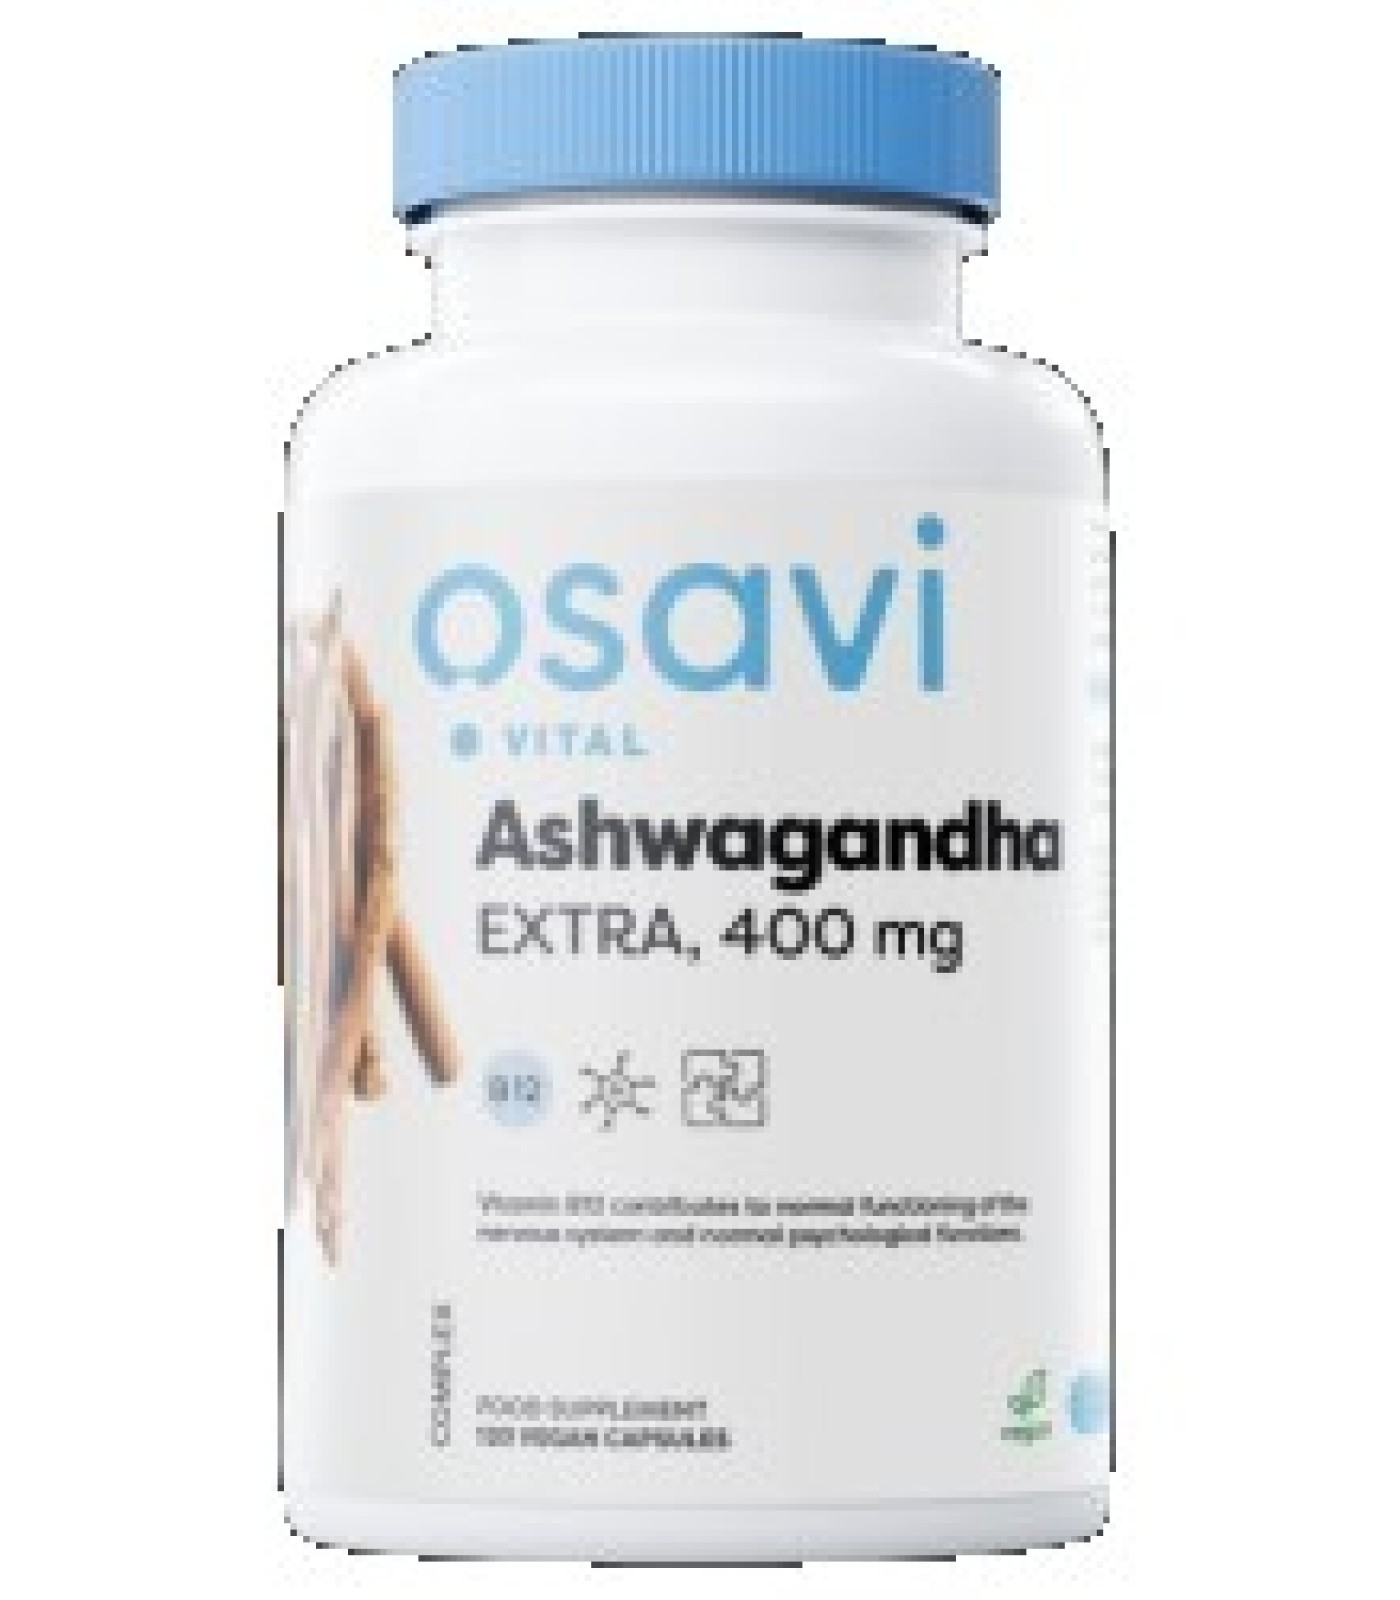 Osavi - Ashwagandha 400 mg / 60 капсули